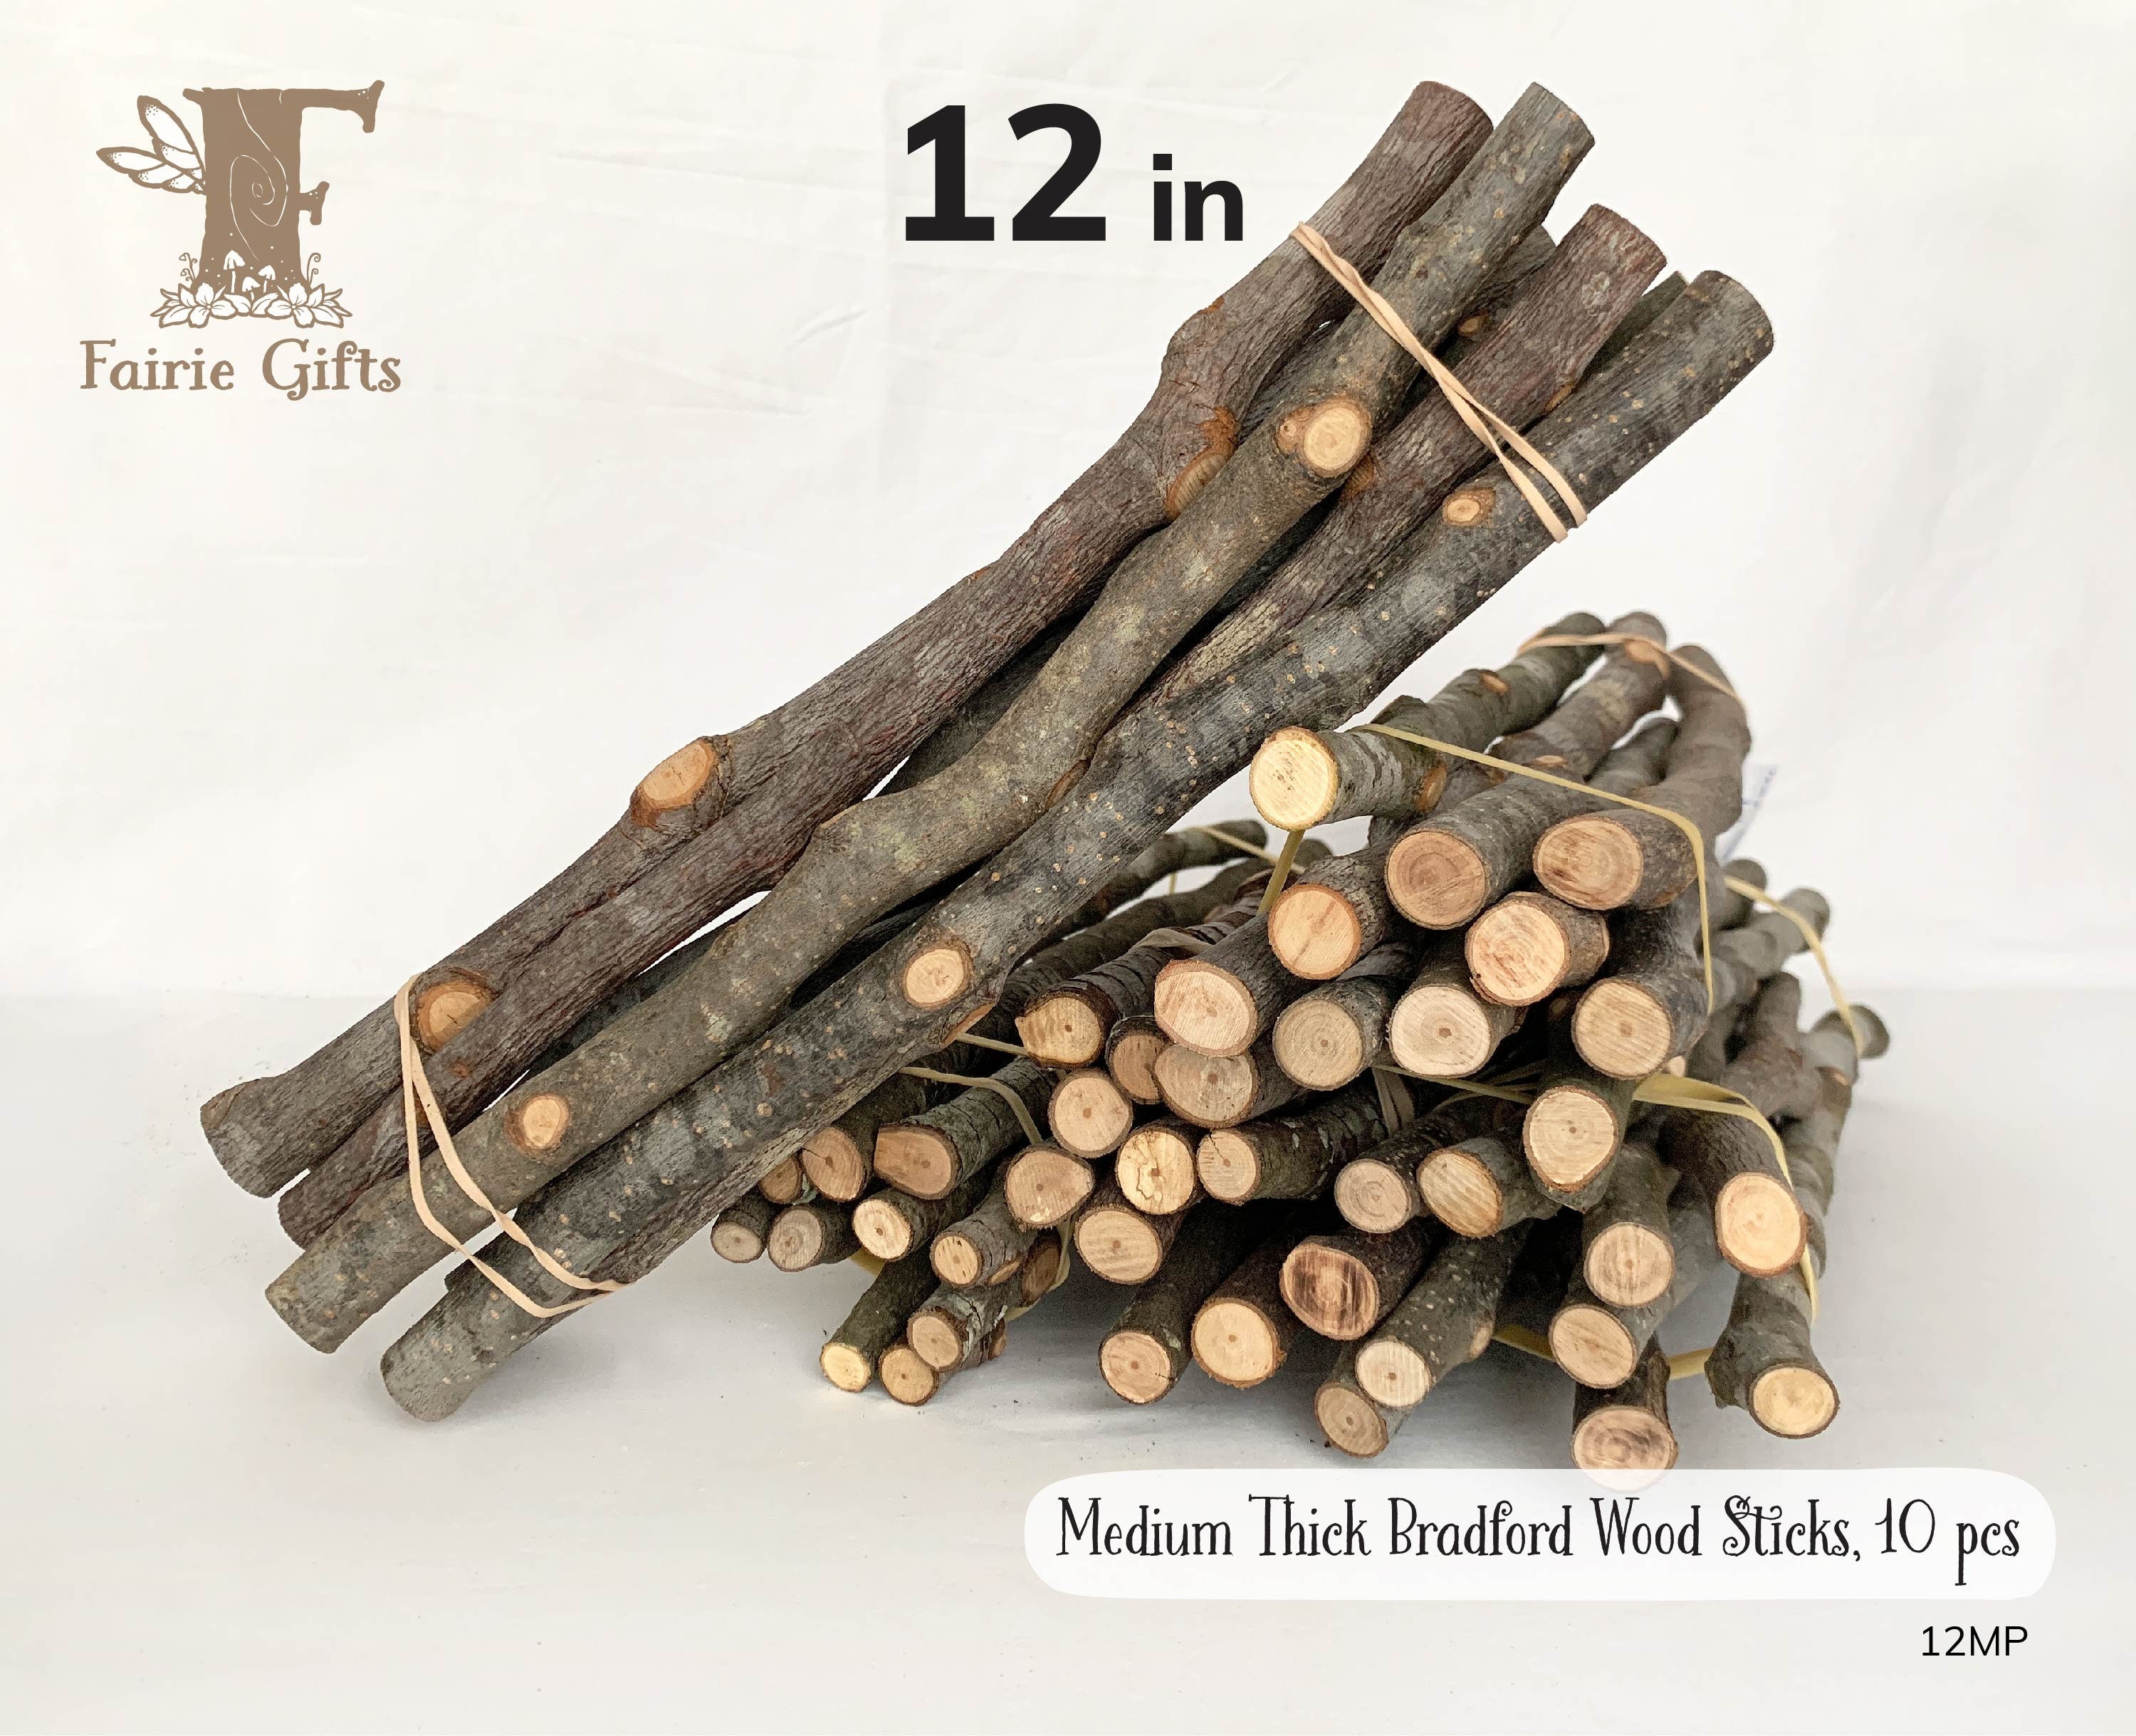 Wooden Sticks 10 pcs